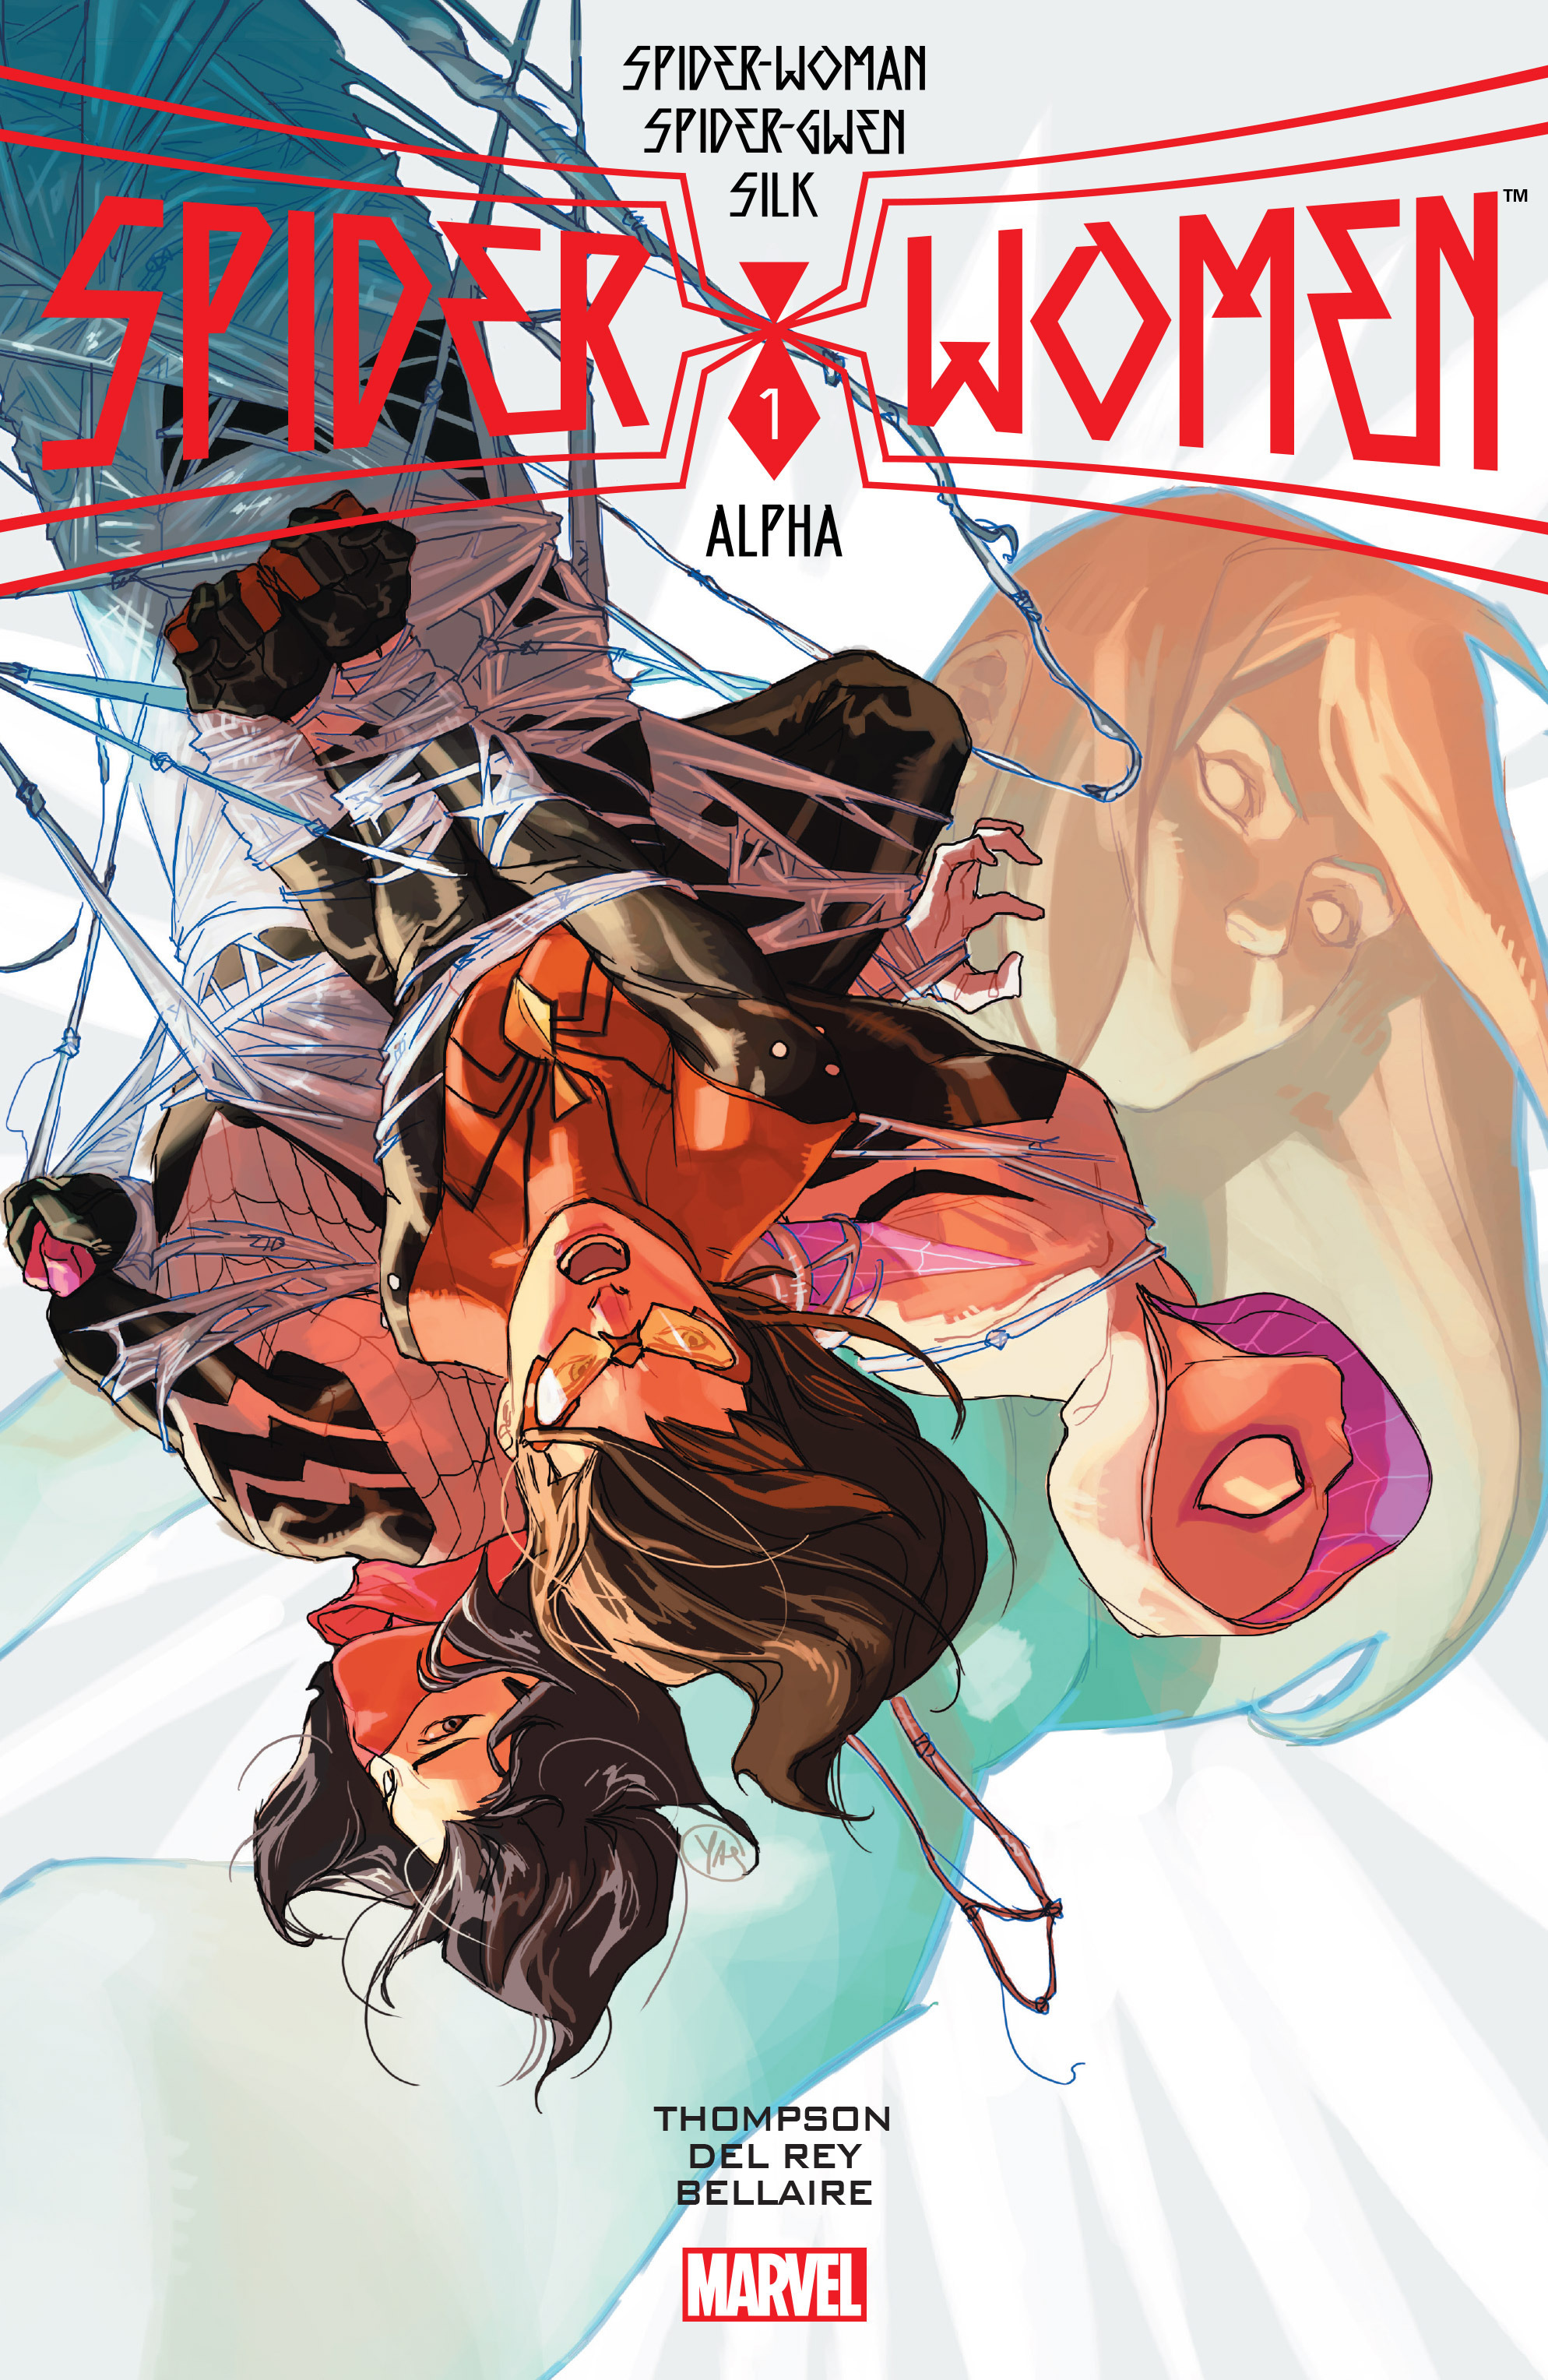 Read online Spider-Women Alpha comic -  Issue # Full - 1